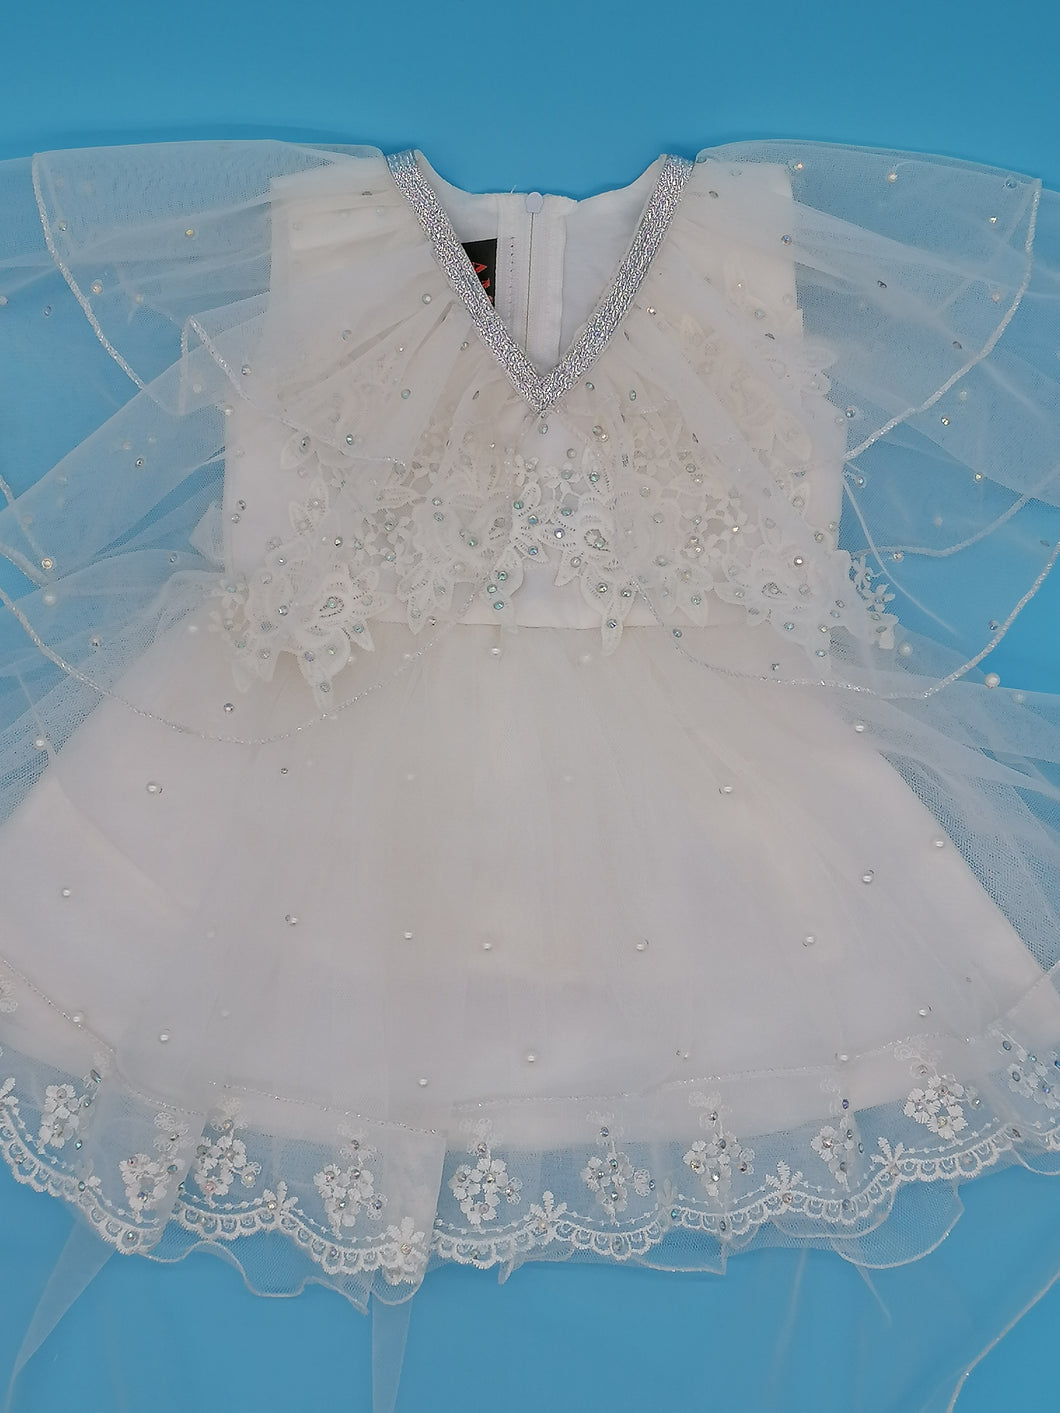 Beautiful Embroidered Christening/Wedding Baby Girls Dress 4 Sizes